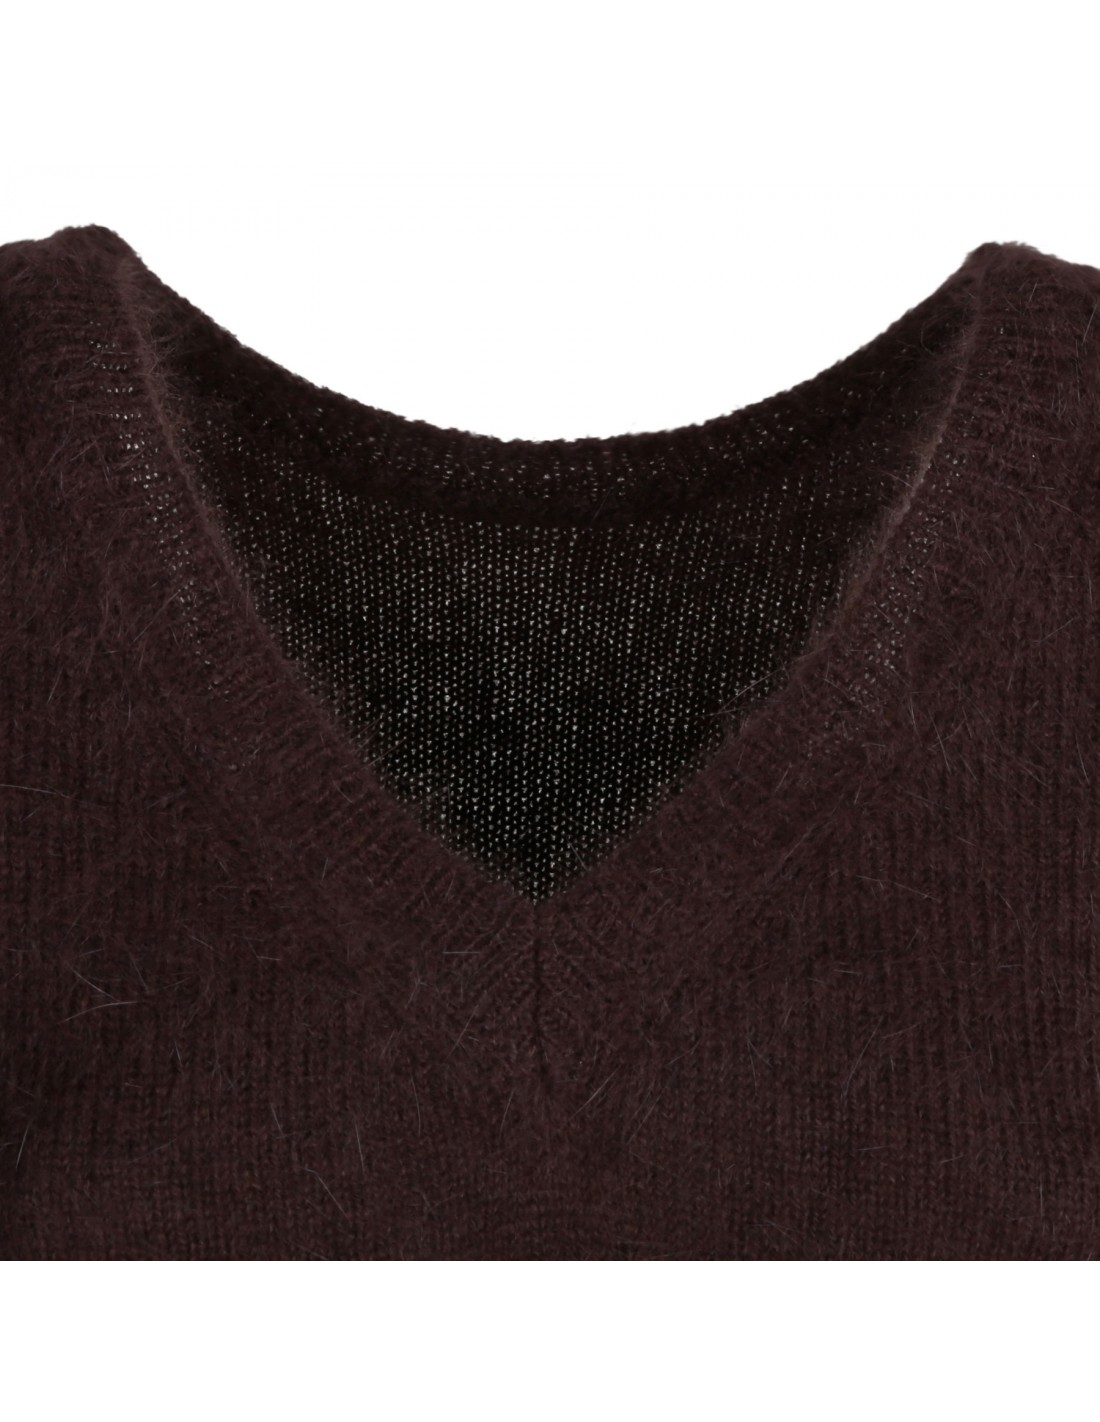 Dark brown angora wool blend sweater